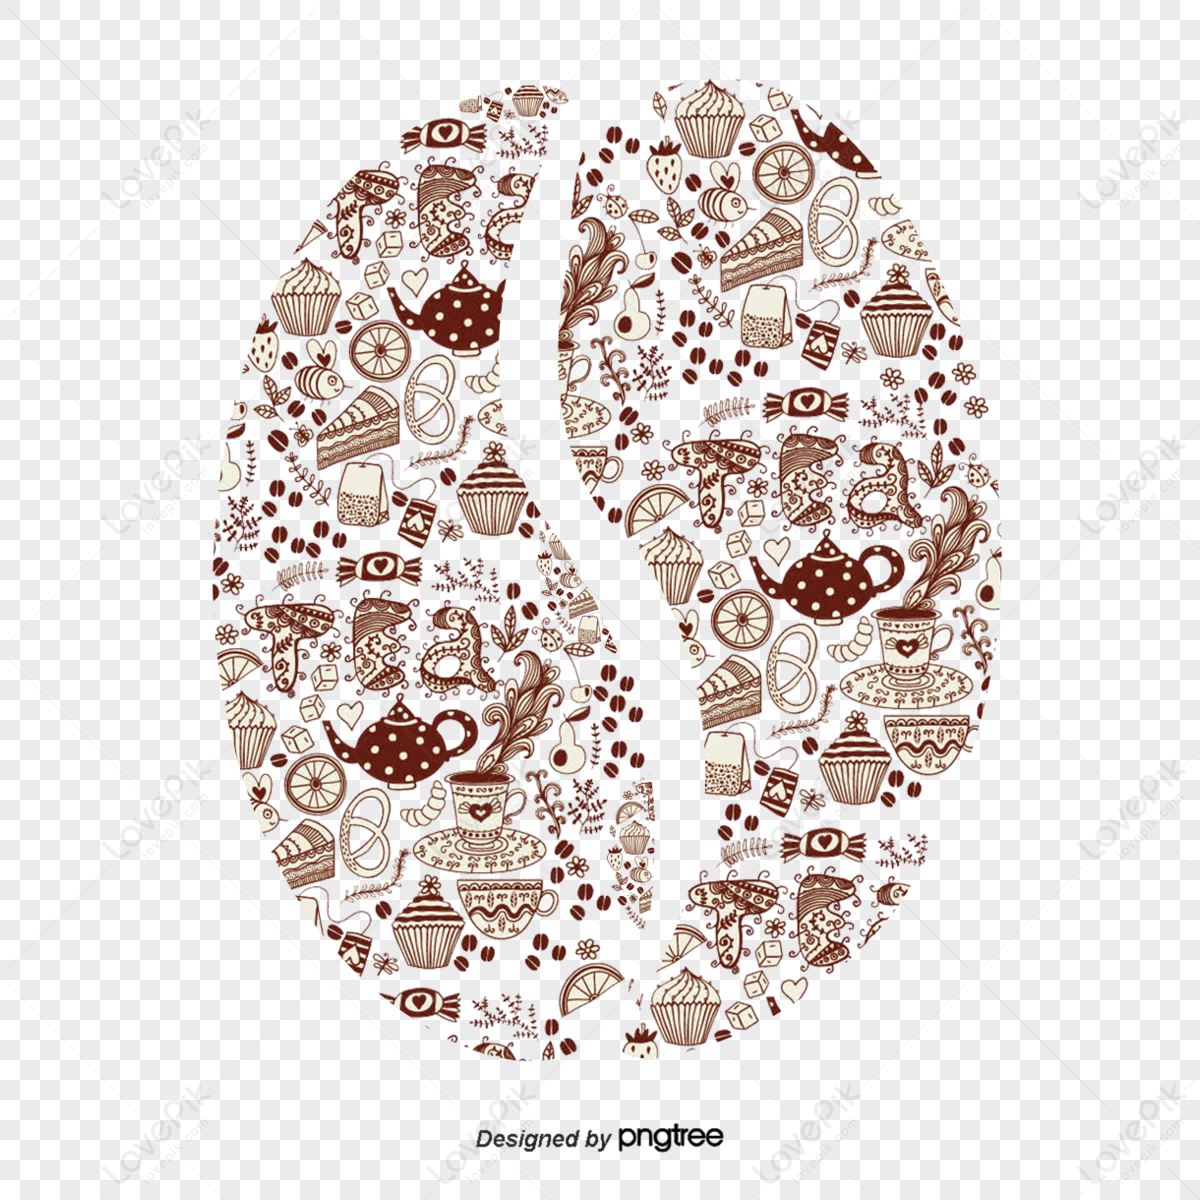 Coffee bean logo and symbol shop image v14 - TemplateMonster